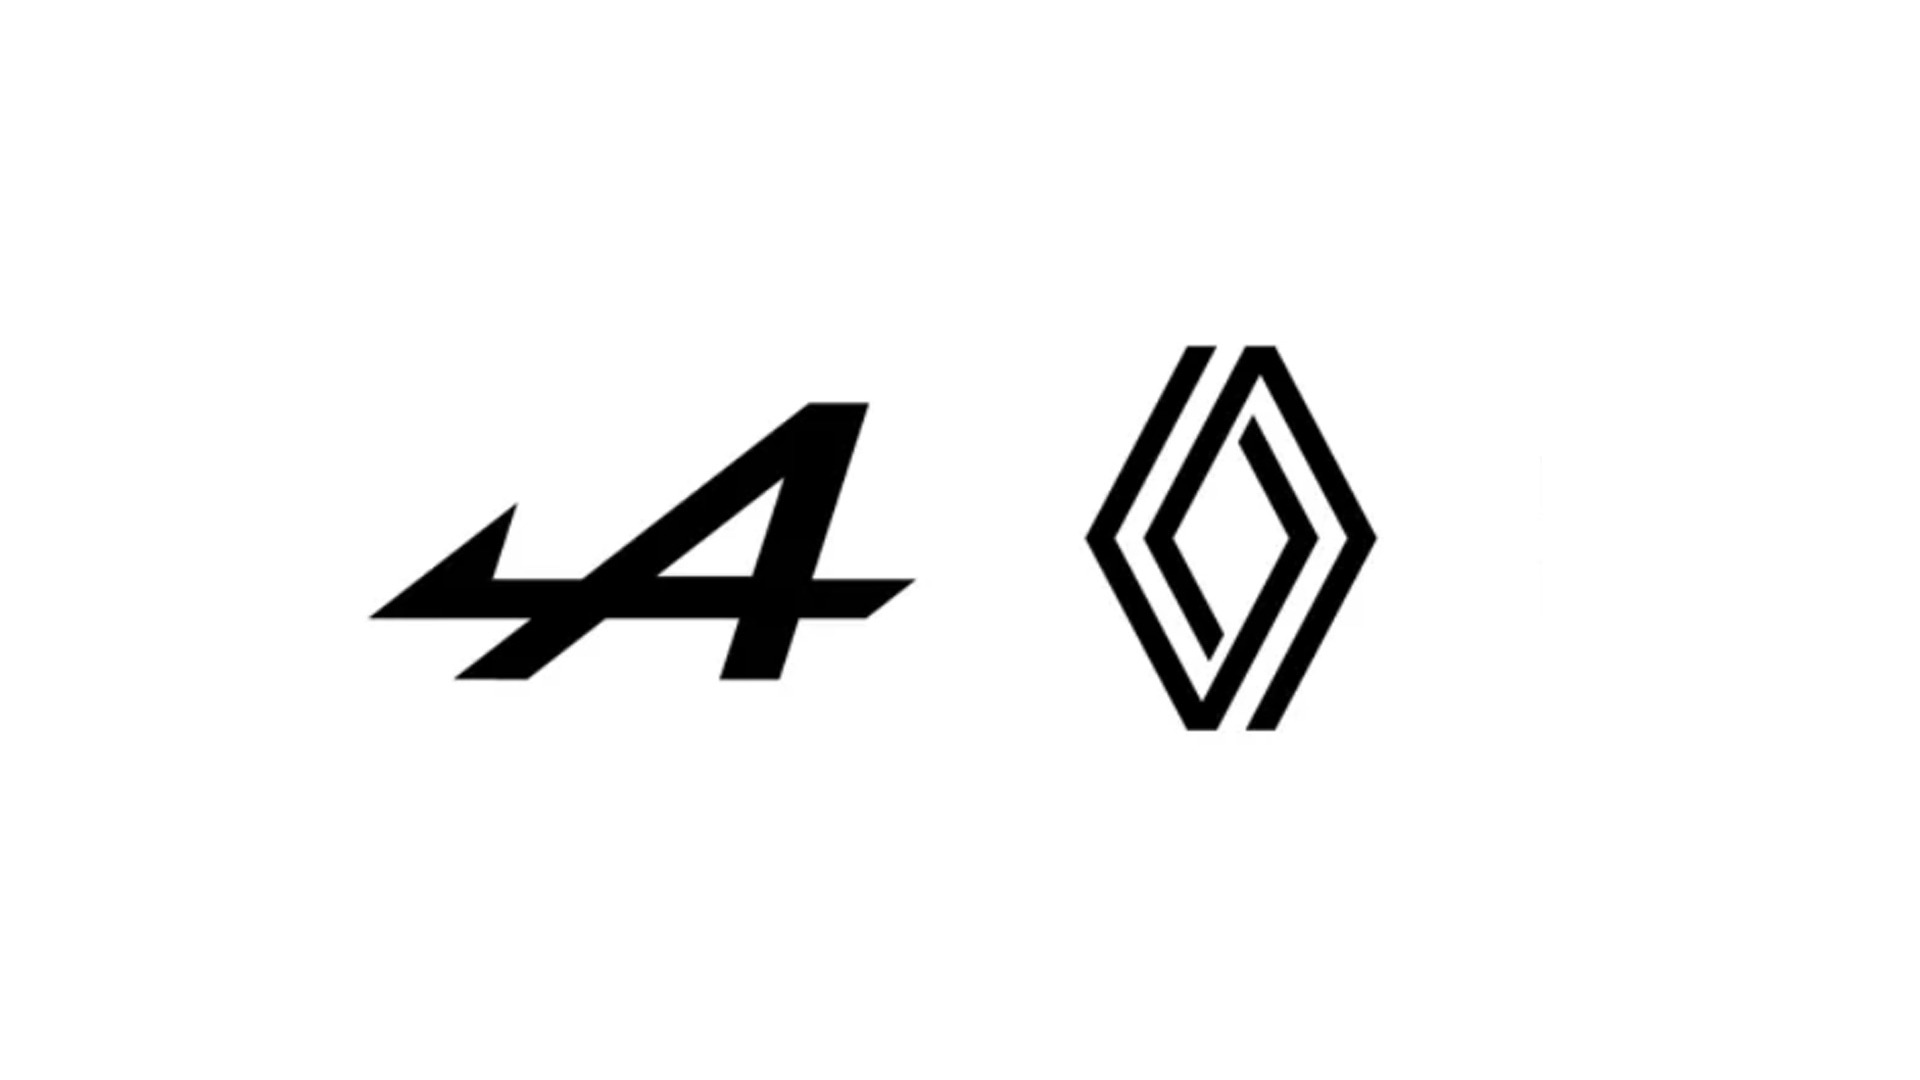 Alpine and Renault logos